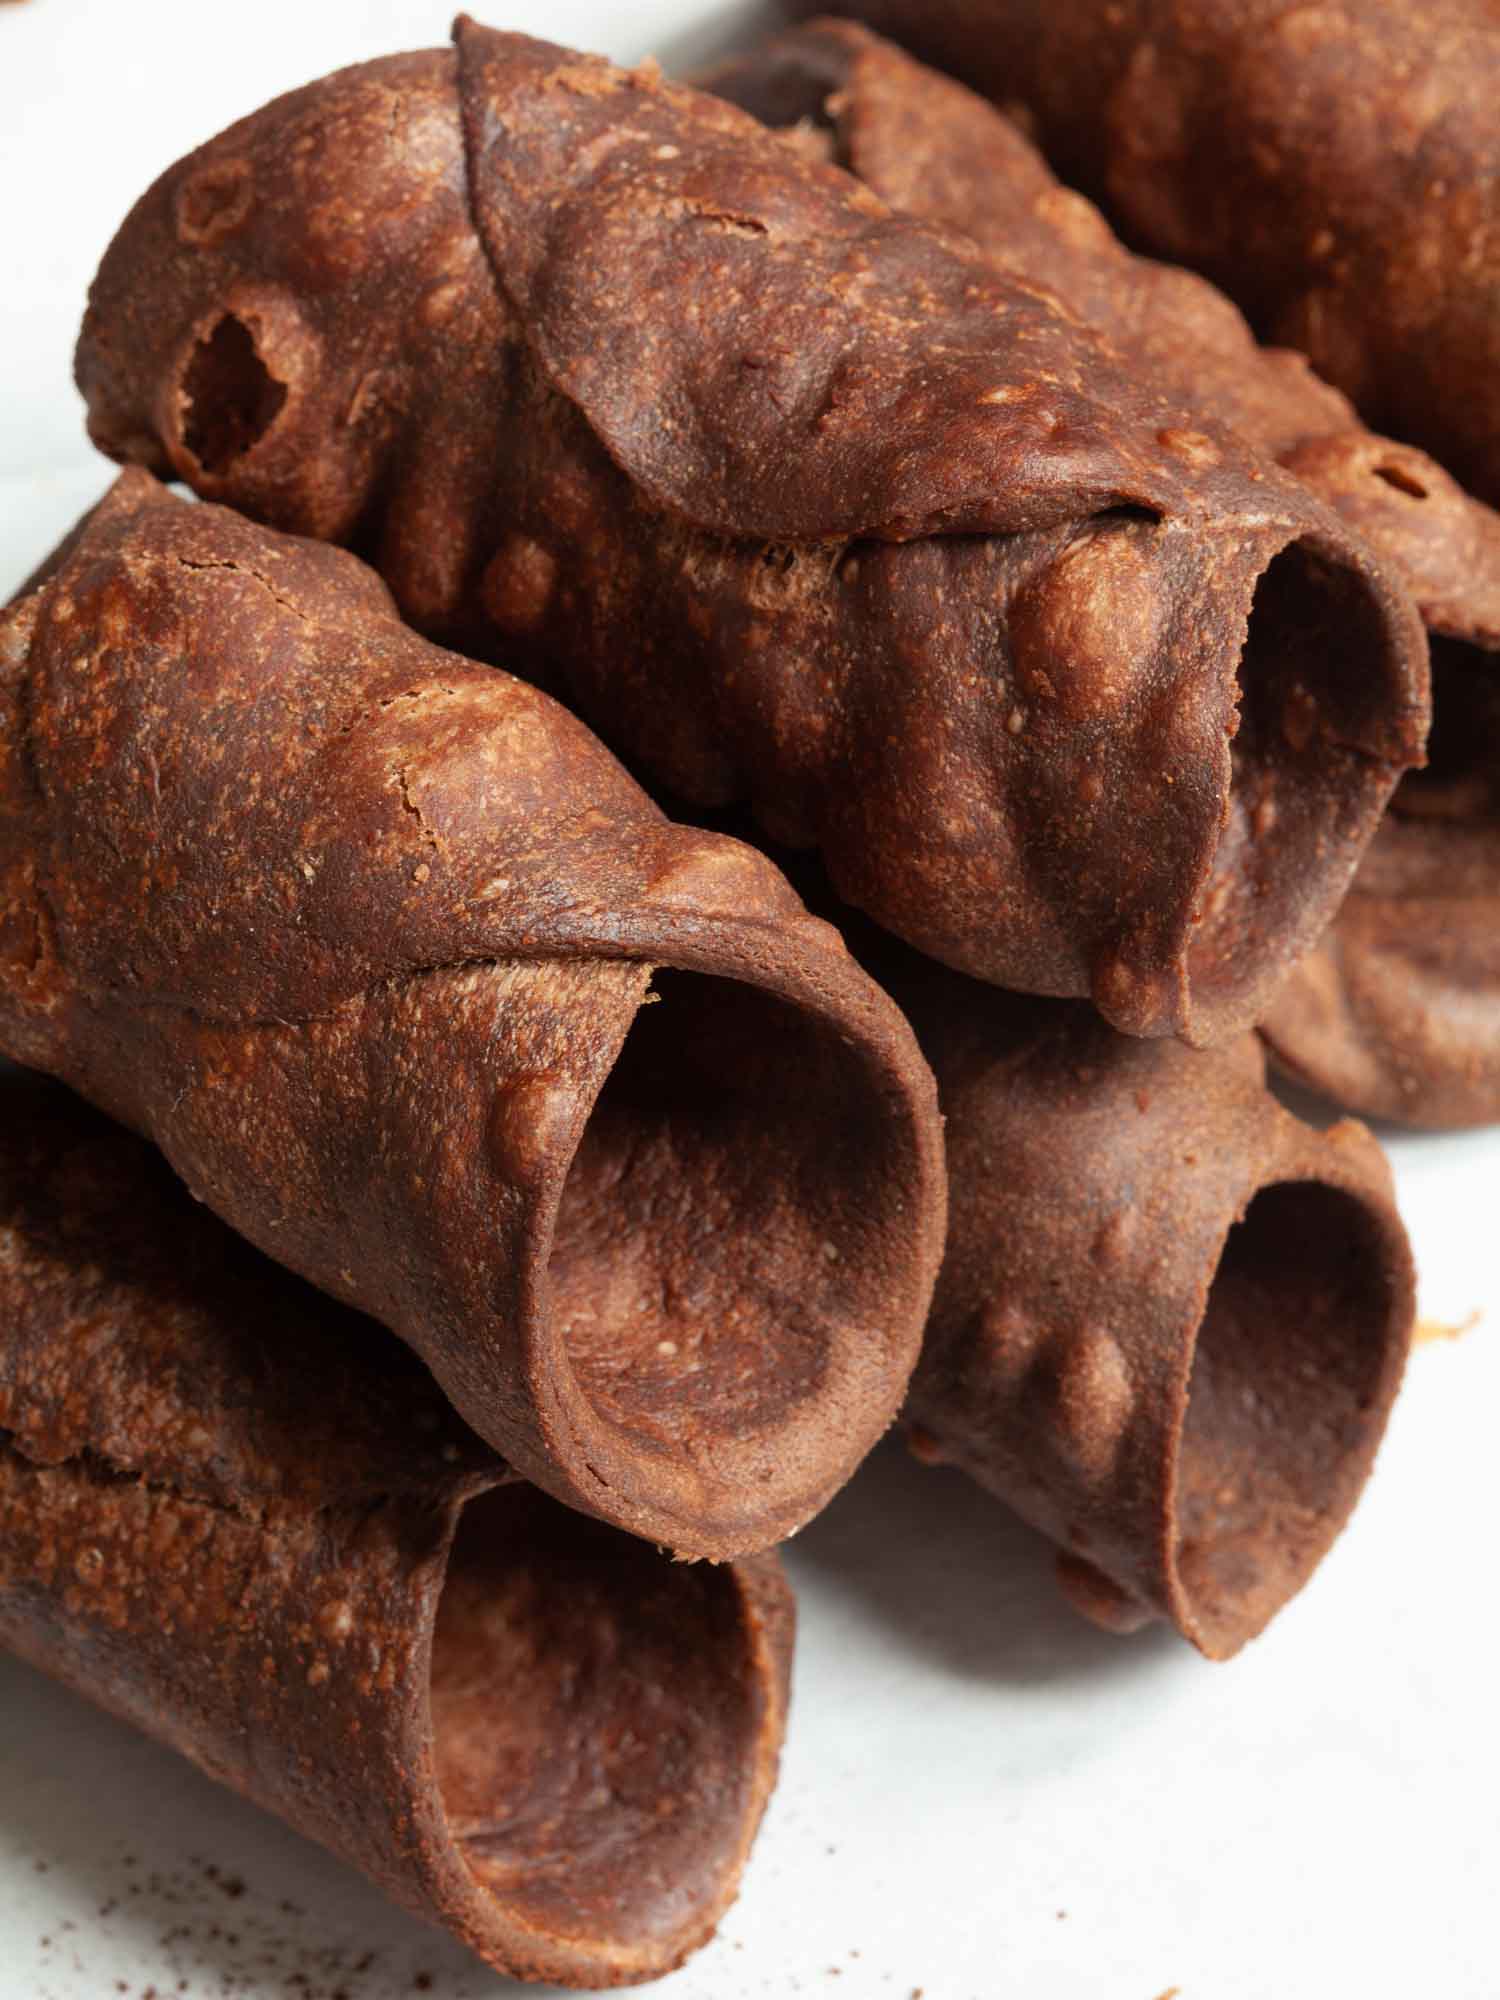 Homemade Italian cocoa cannoli shells